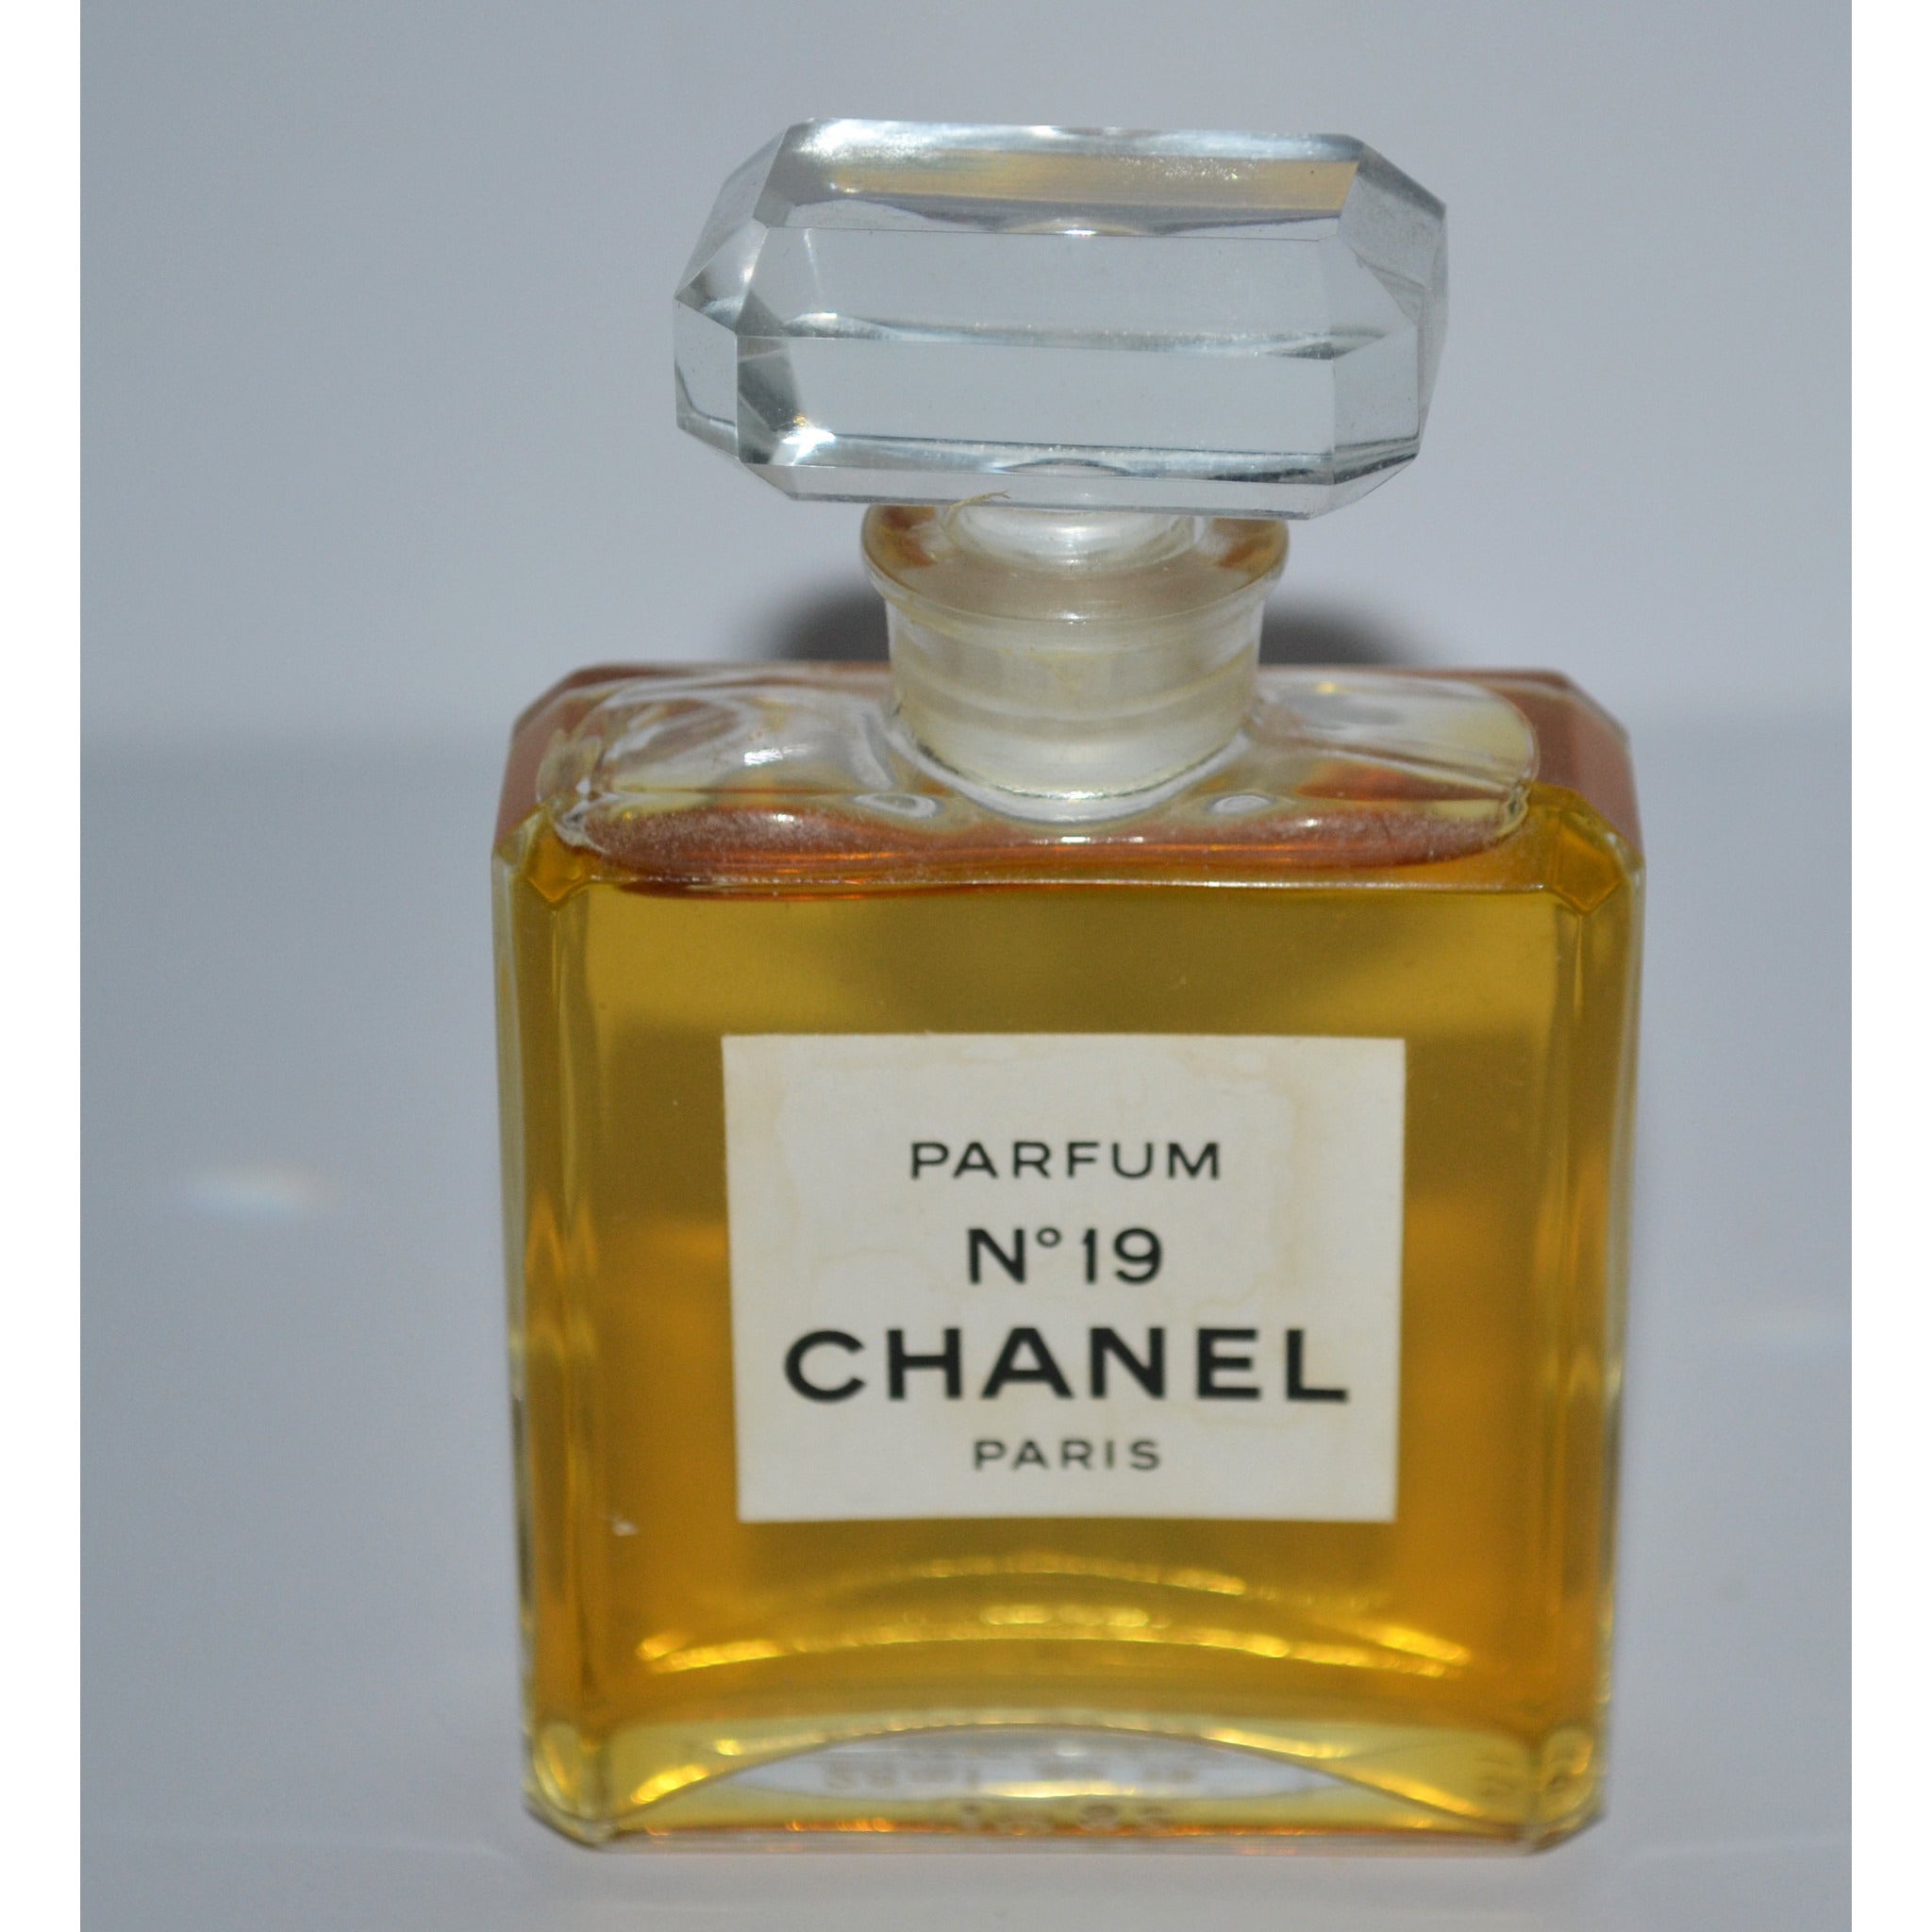 Chanel (Perfumes) 1977 Eau de Toilette N° 19 — Perfumes